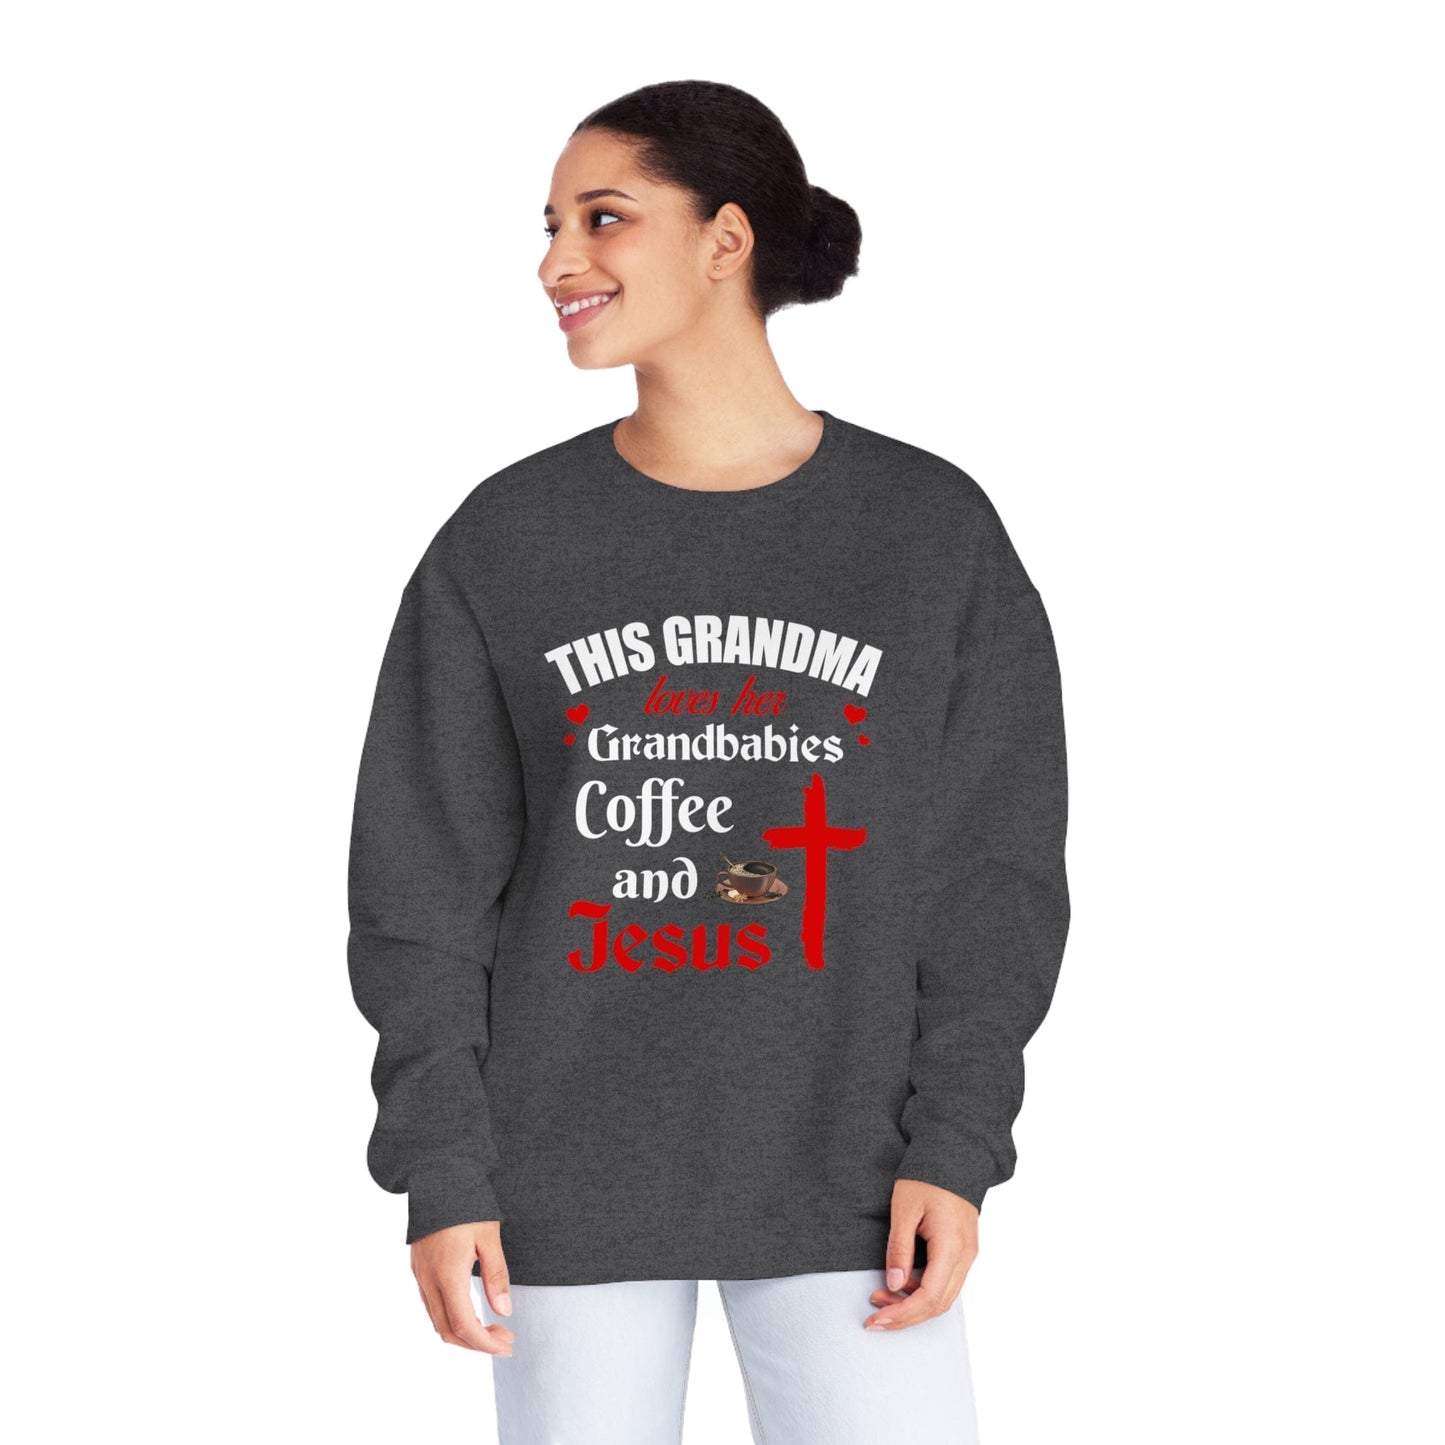 This Grandma Loves Her Grandbabies, Coffee and Jesus Unisex NuBlend® Crewneck Sweatshirt